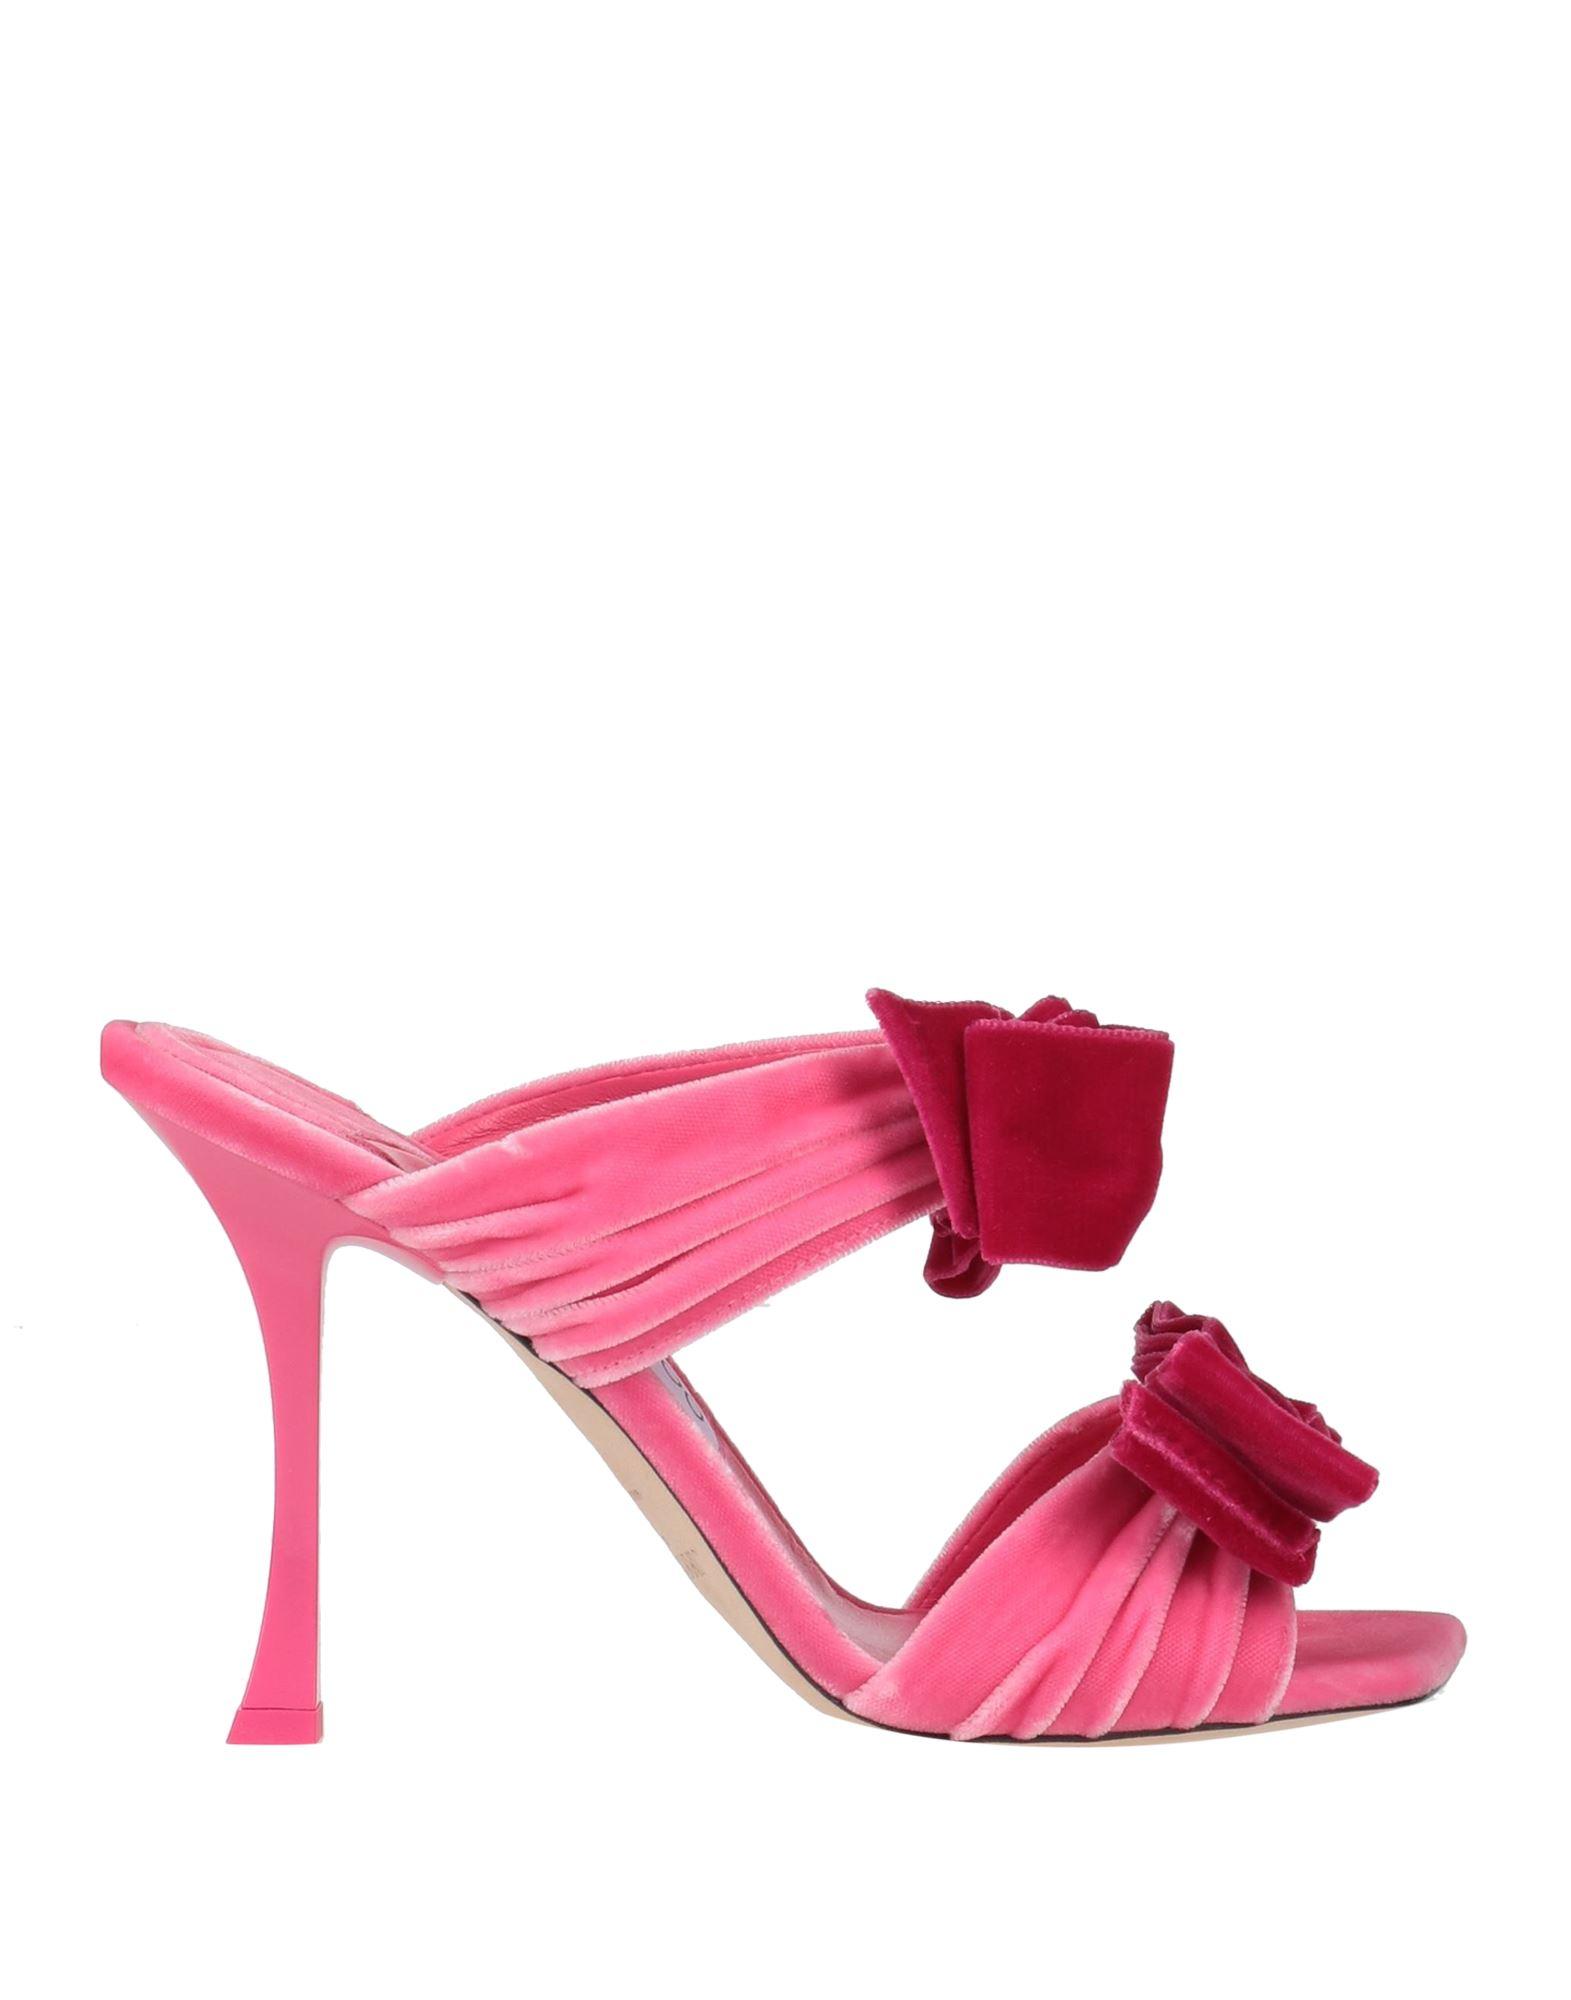 Jimmy Choo Sandals in Pink | Lyst